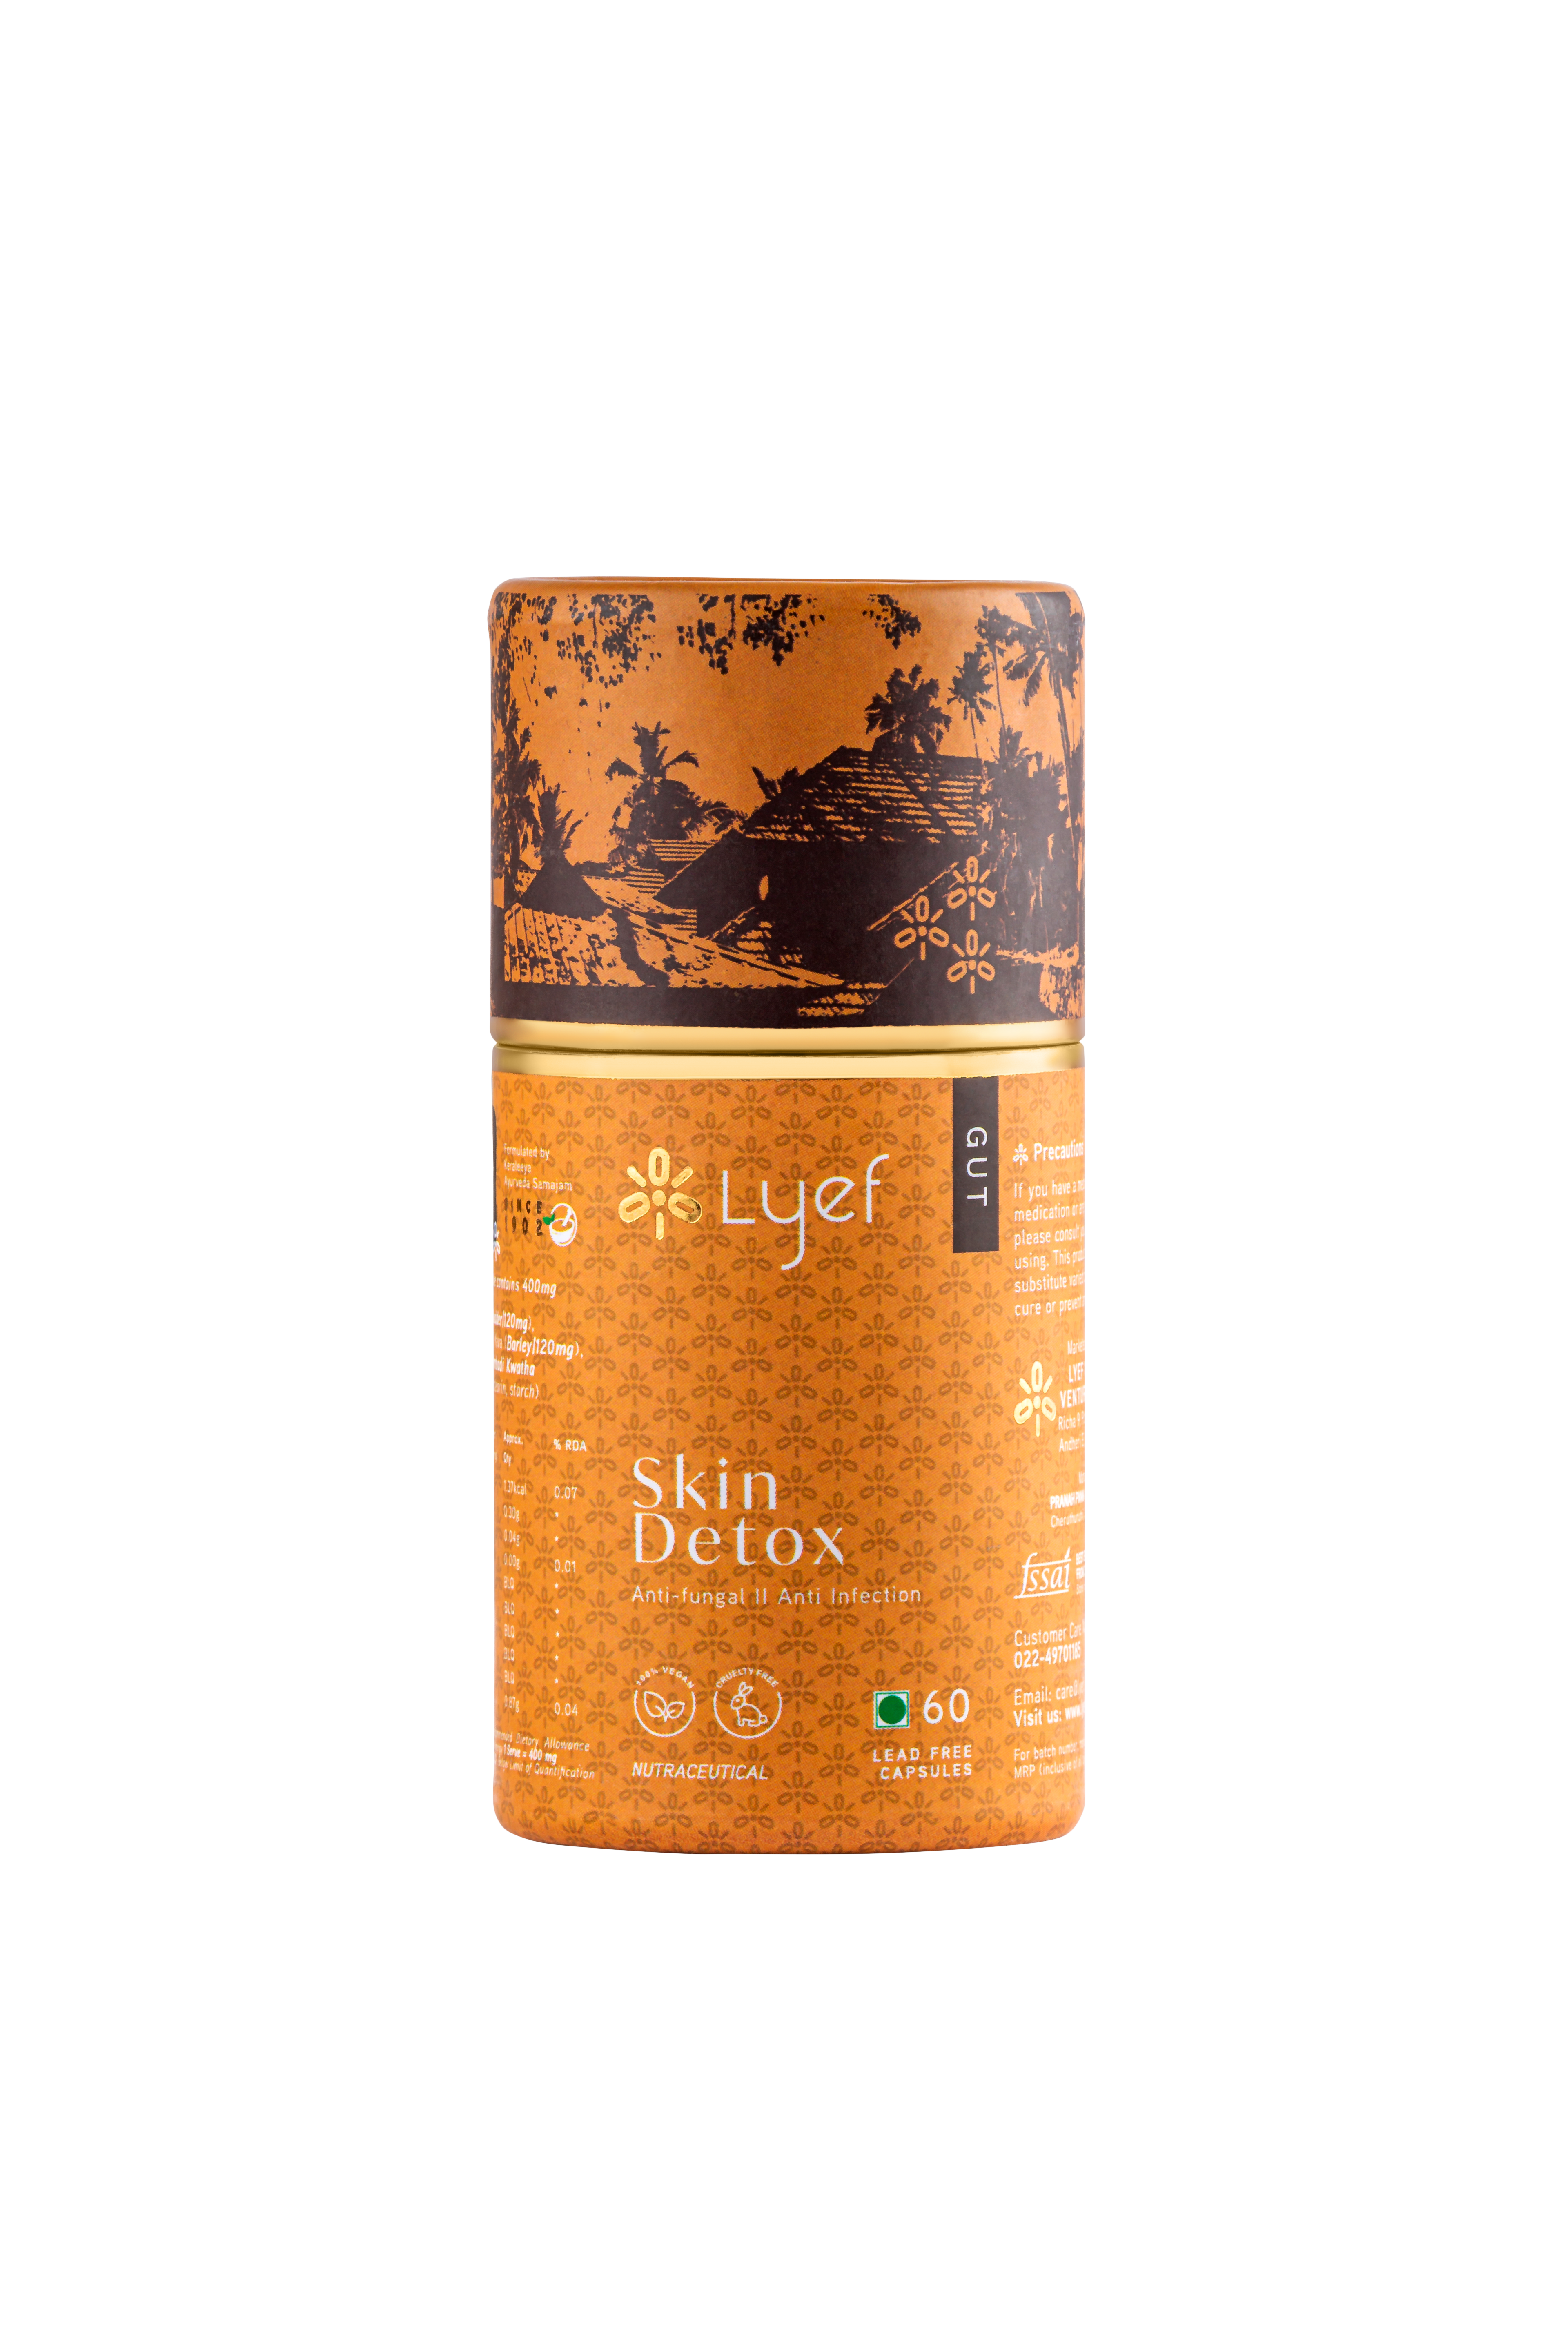 Buy LYEF Skin Detox at Best Price Online